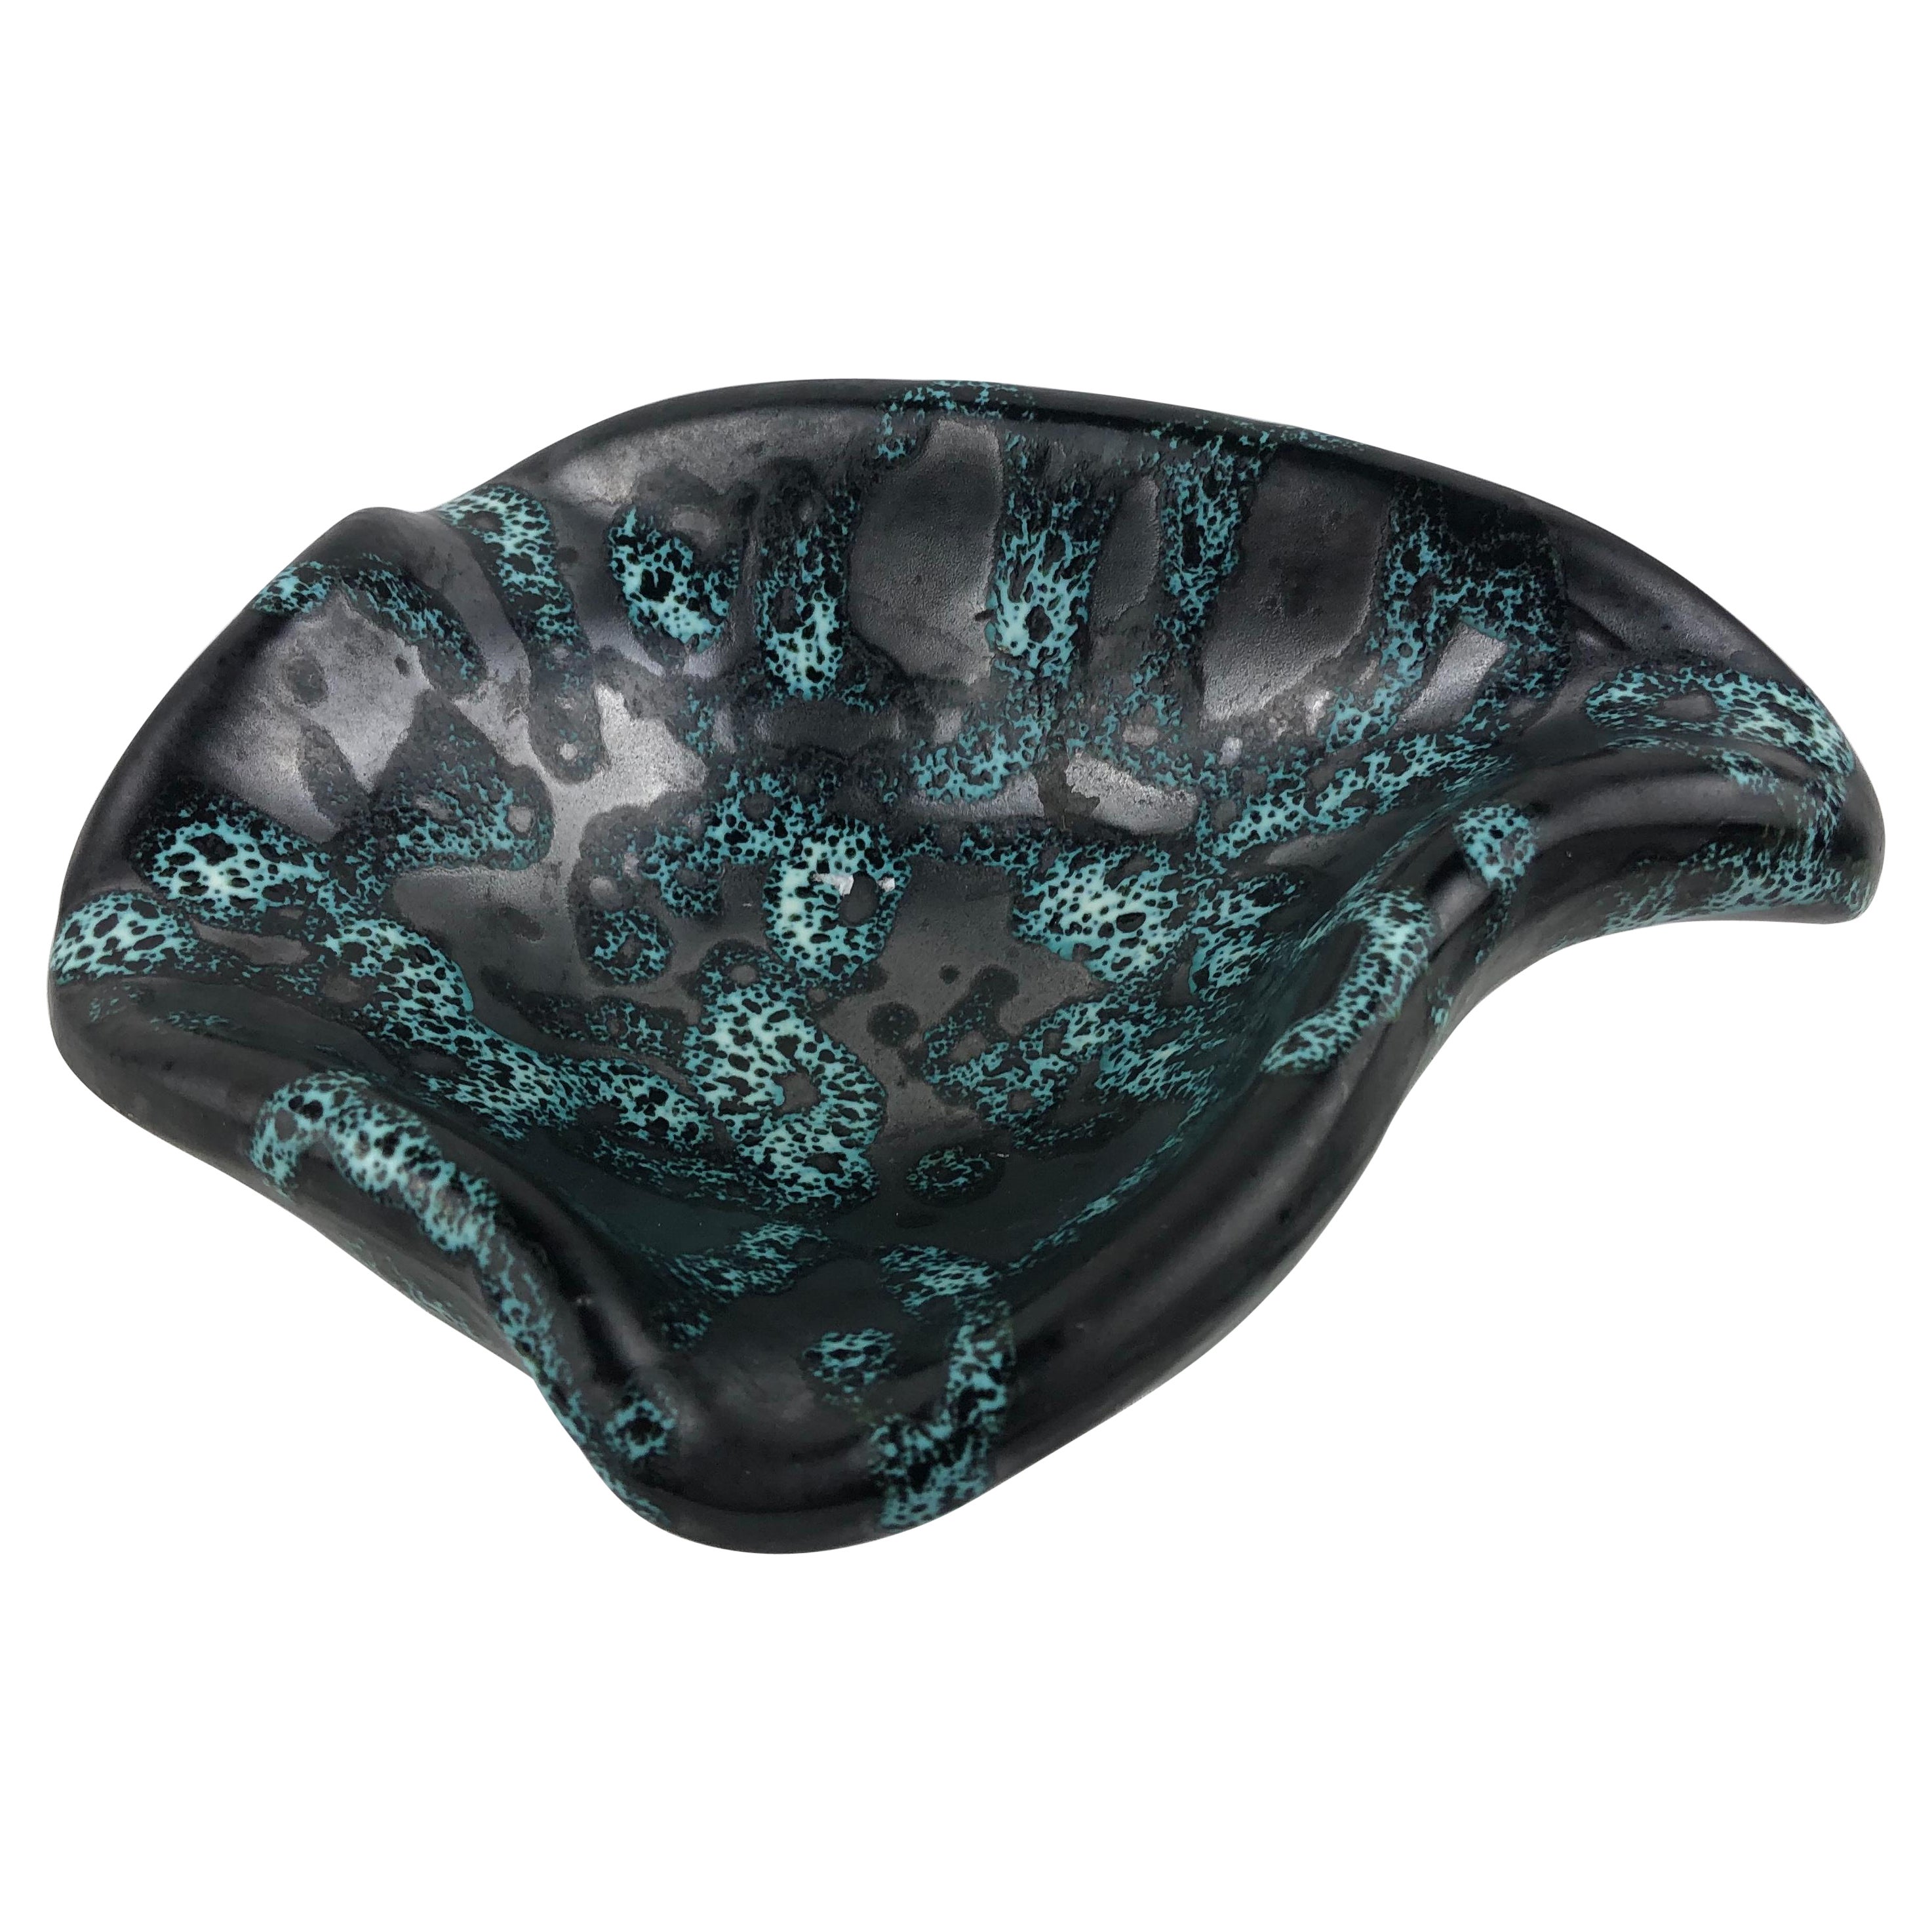 French Midcentury Vallauris Ceramic Key Holder or Vide Poche, Blue Glazed